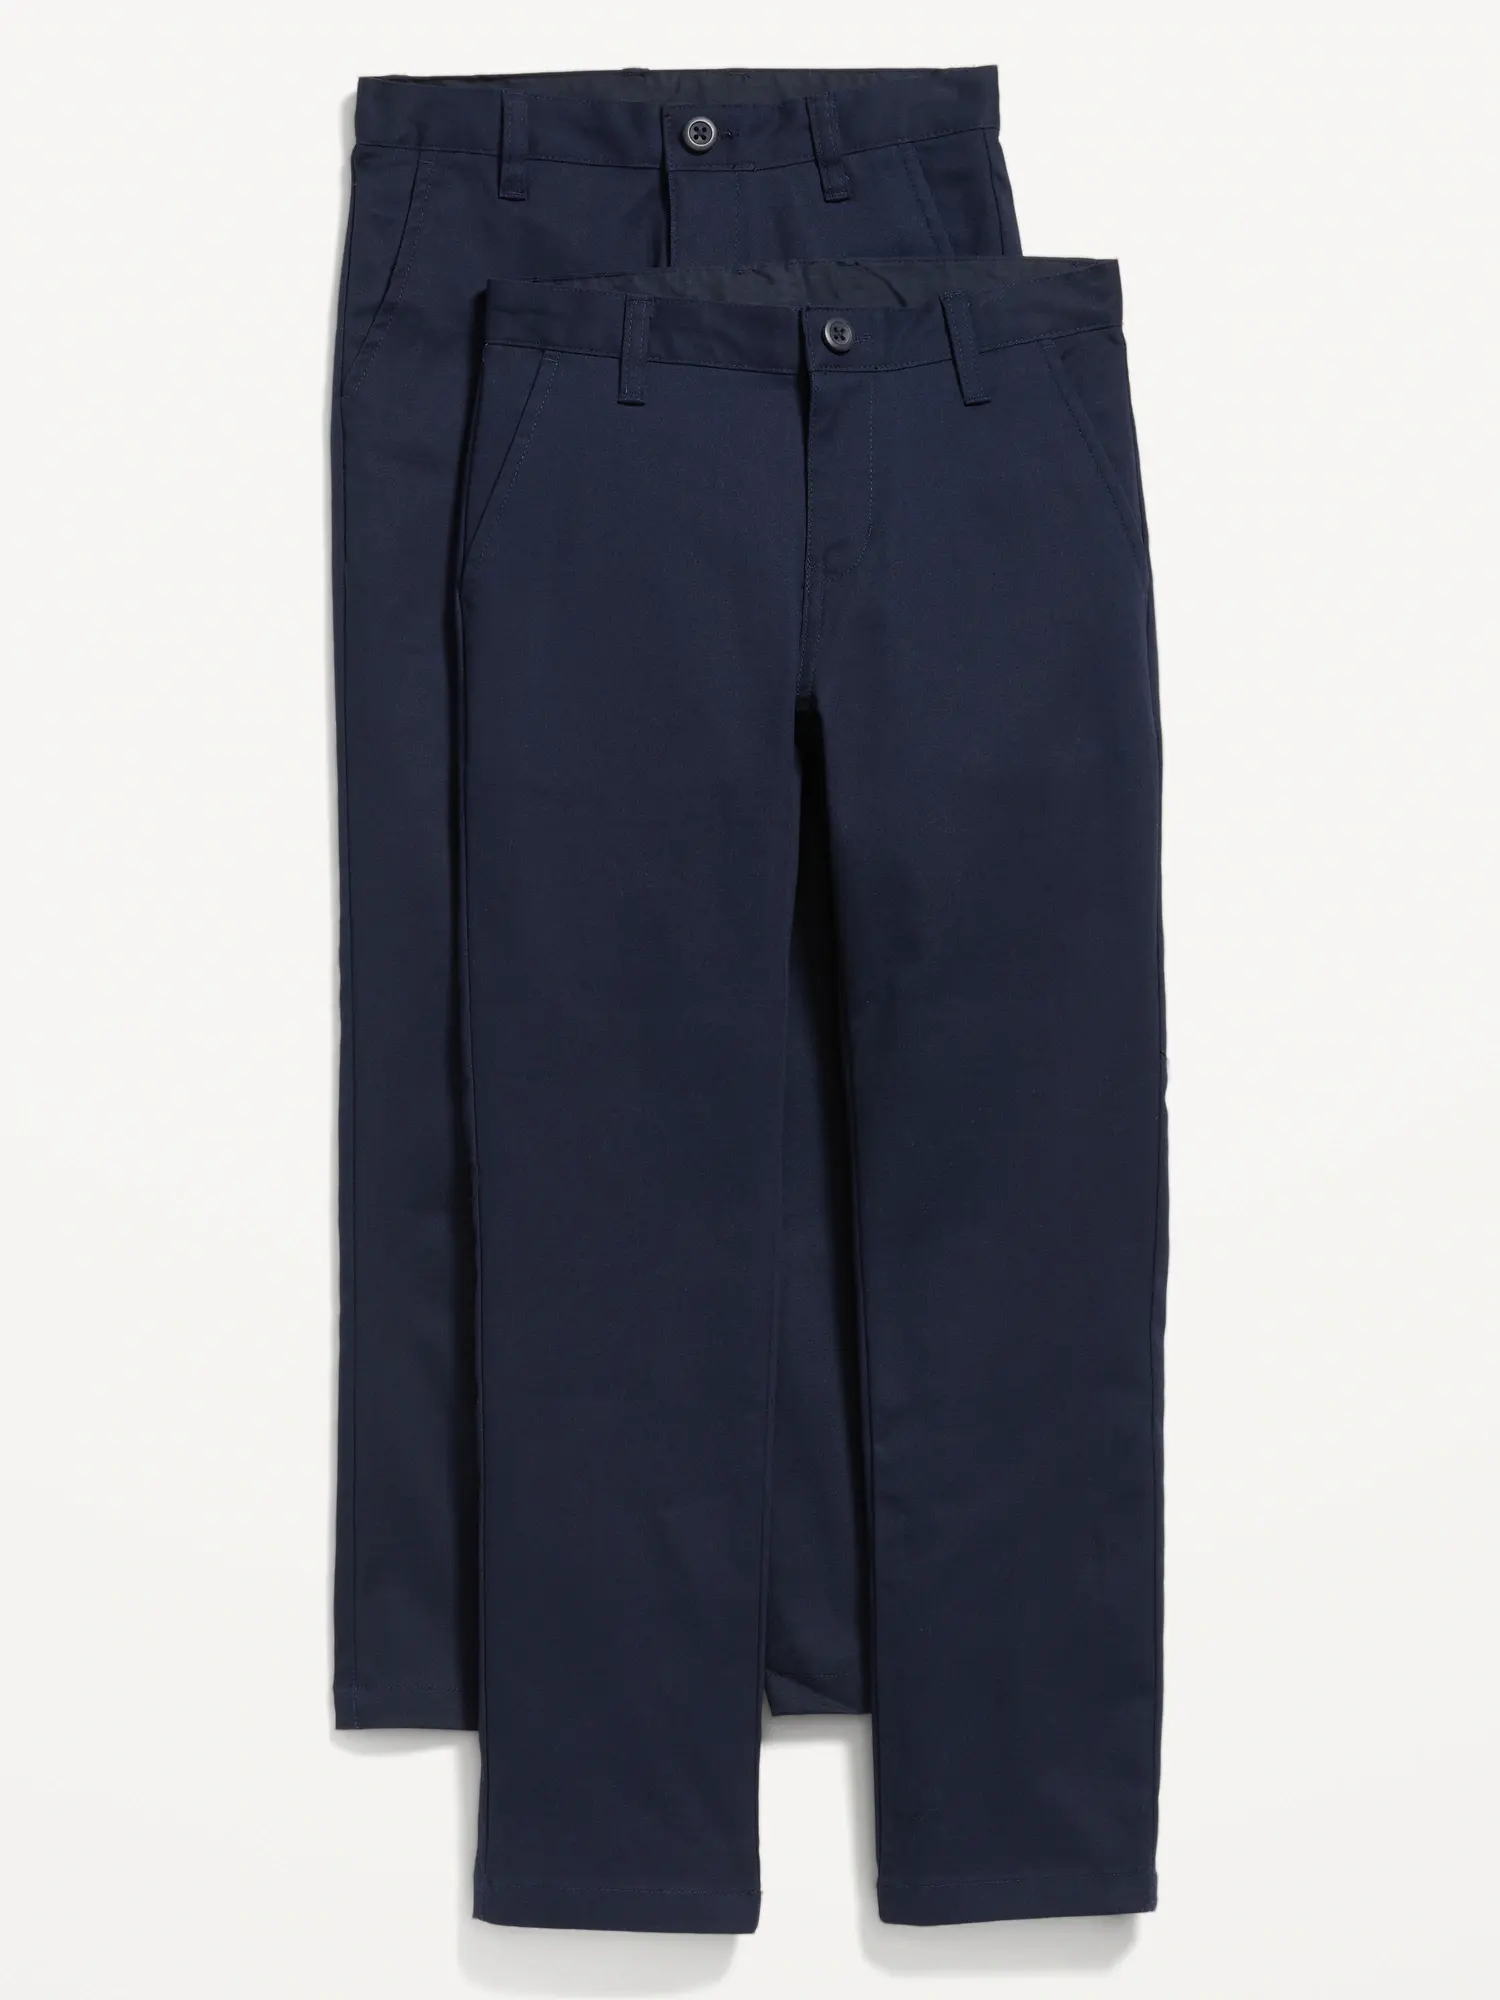 Old Navy Slim School Uniform Chino Pants 2-Pack for Boys blue. 1